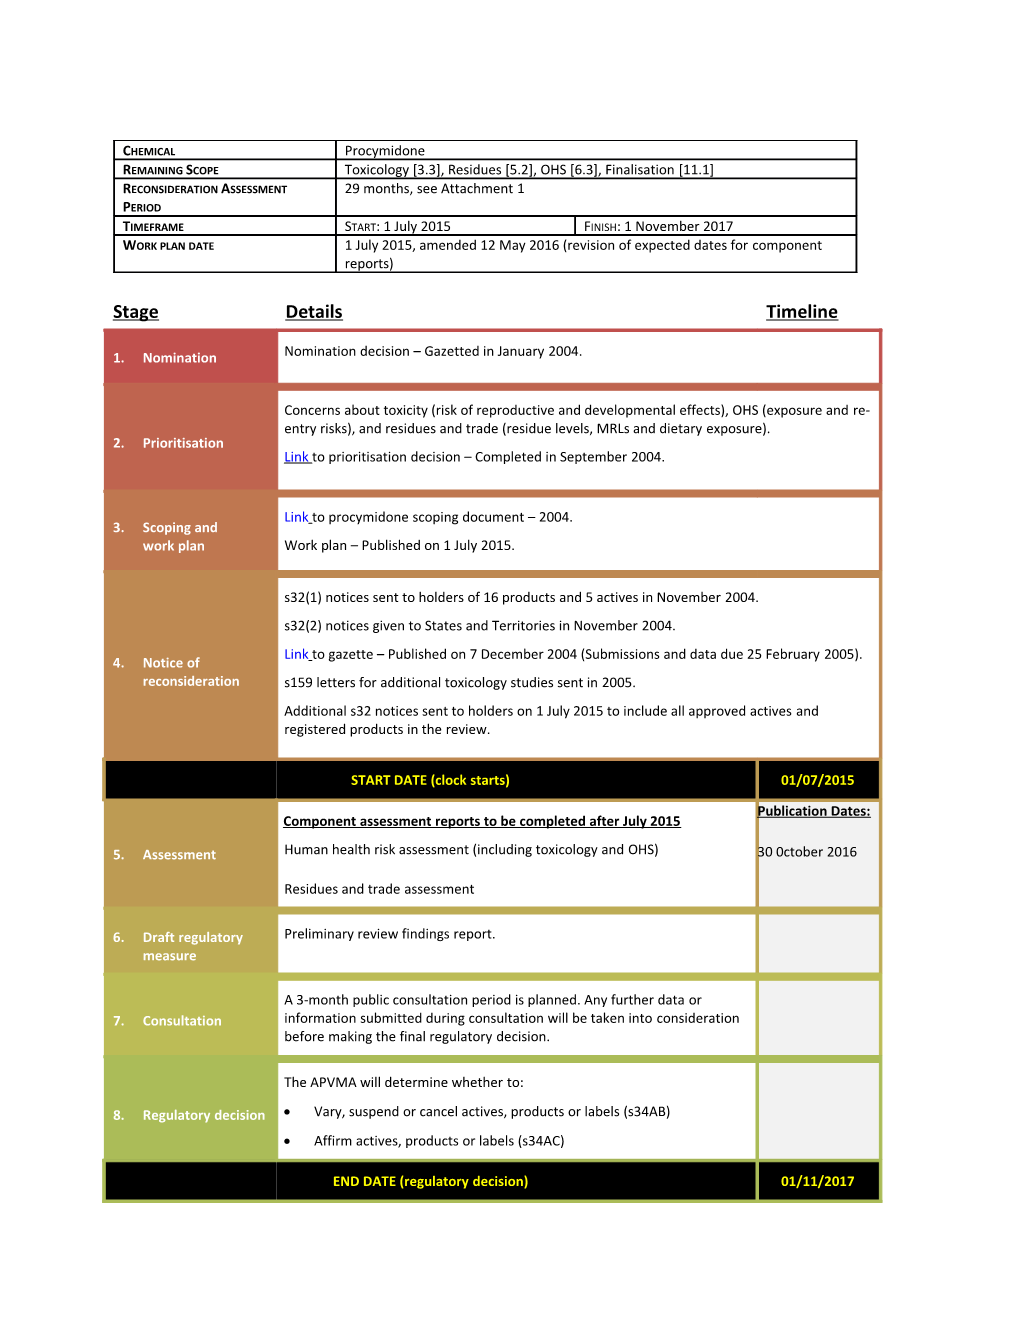 Chemical Review Workplan - Procymidone